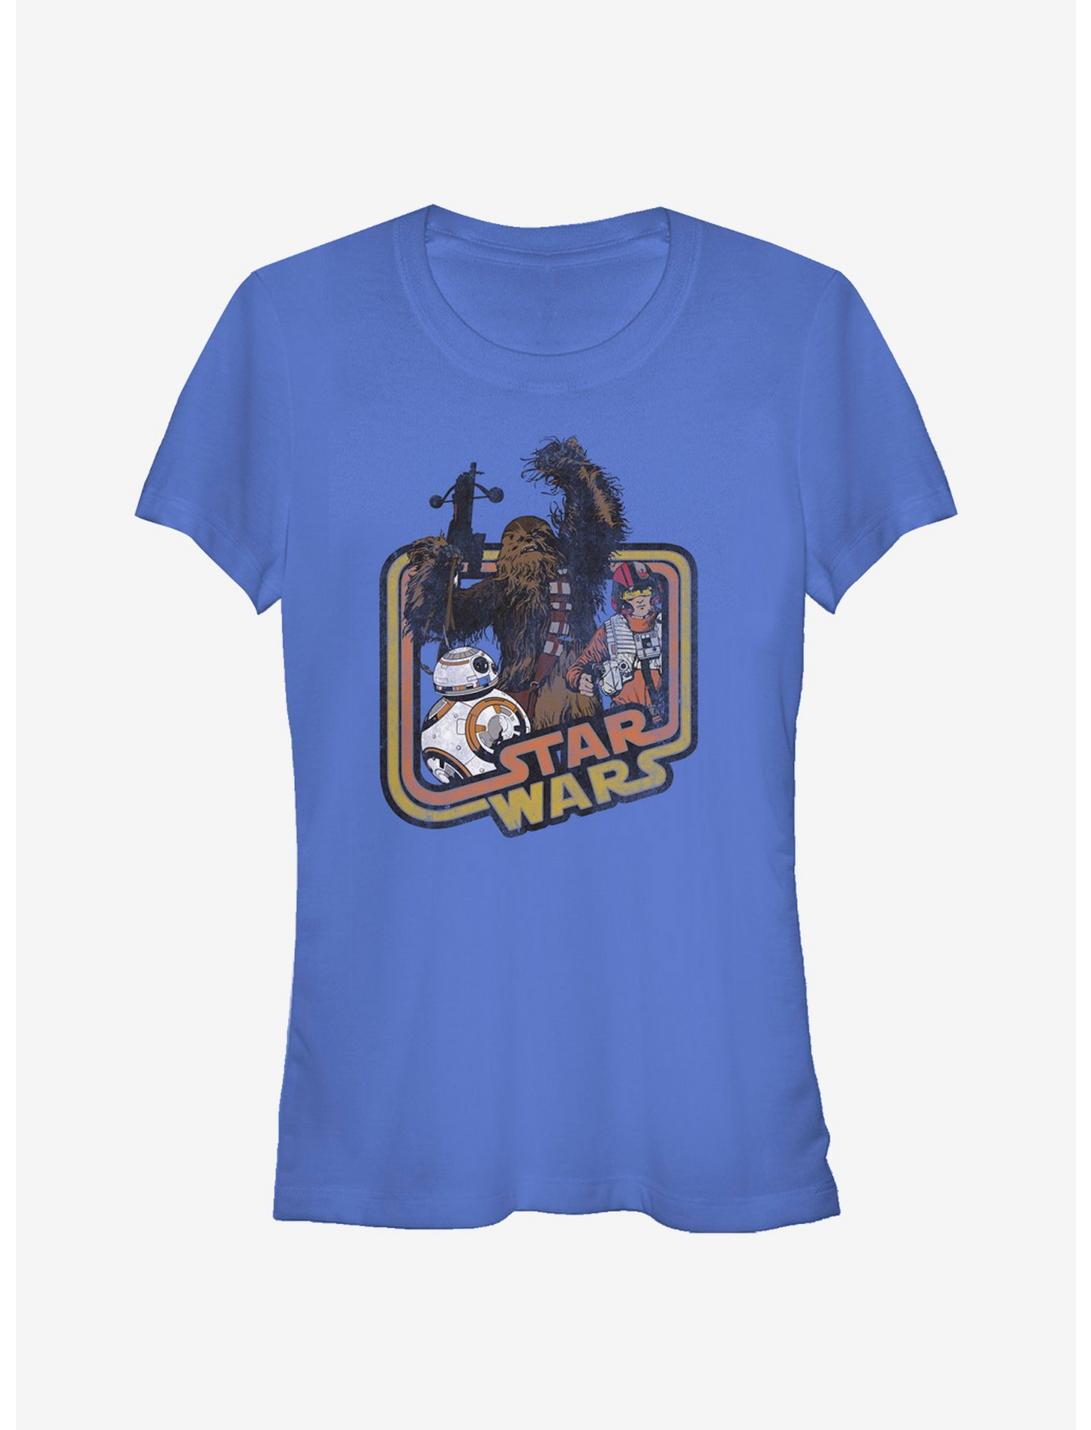 Star Wars Retro Chewbacca and Poe Dameron Girls T-Shirt, ROYAL, hi-res